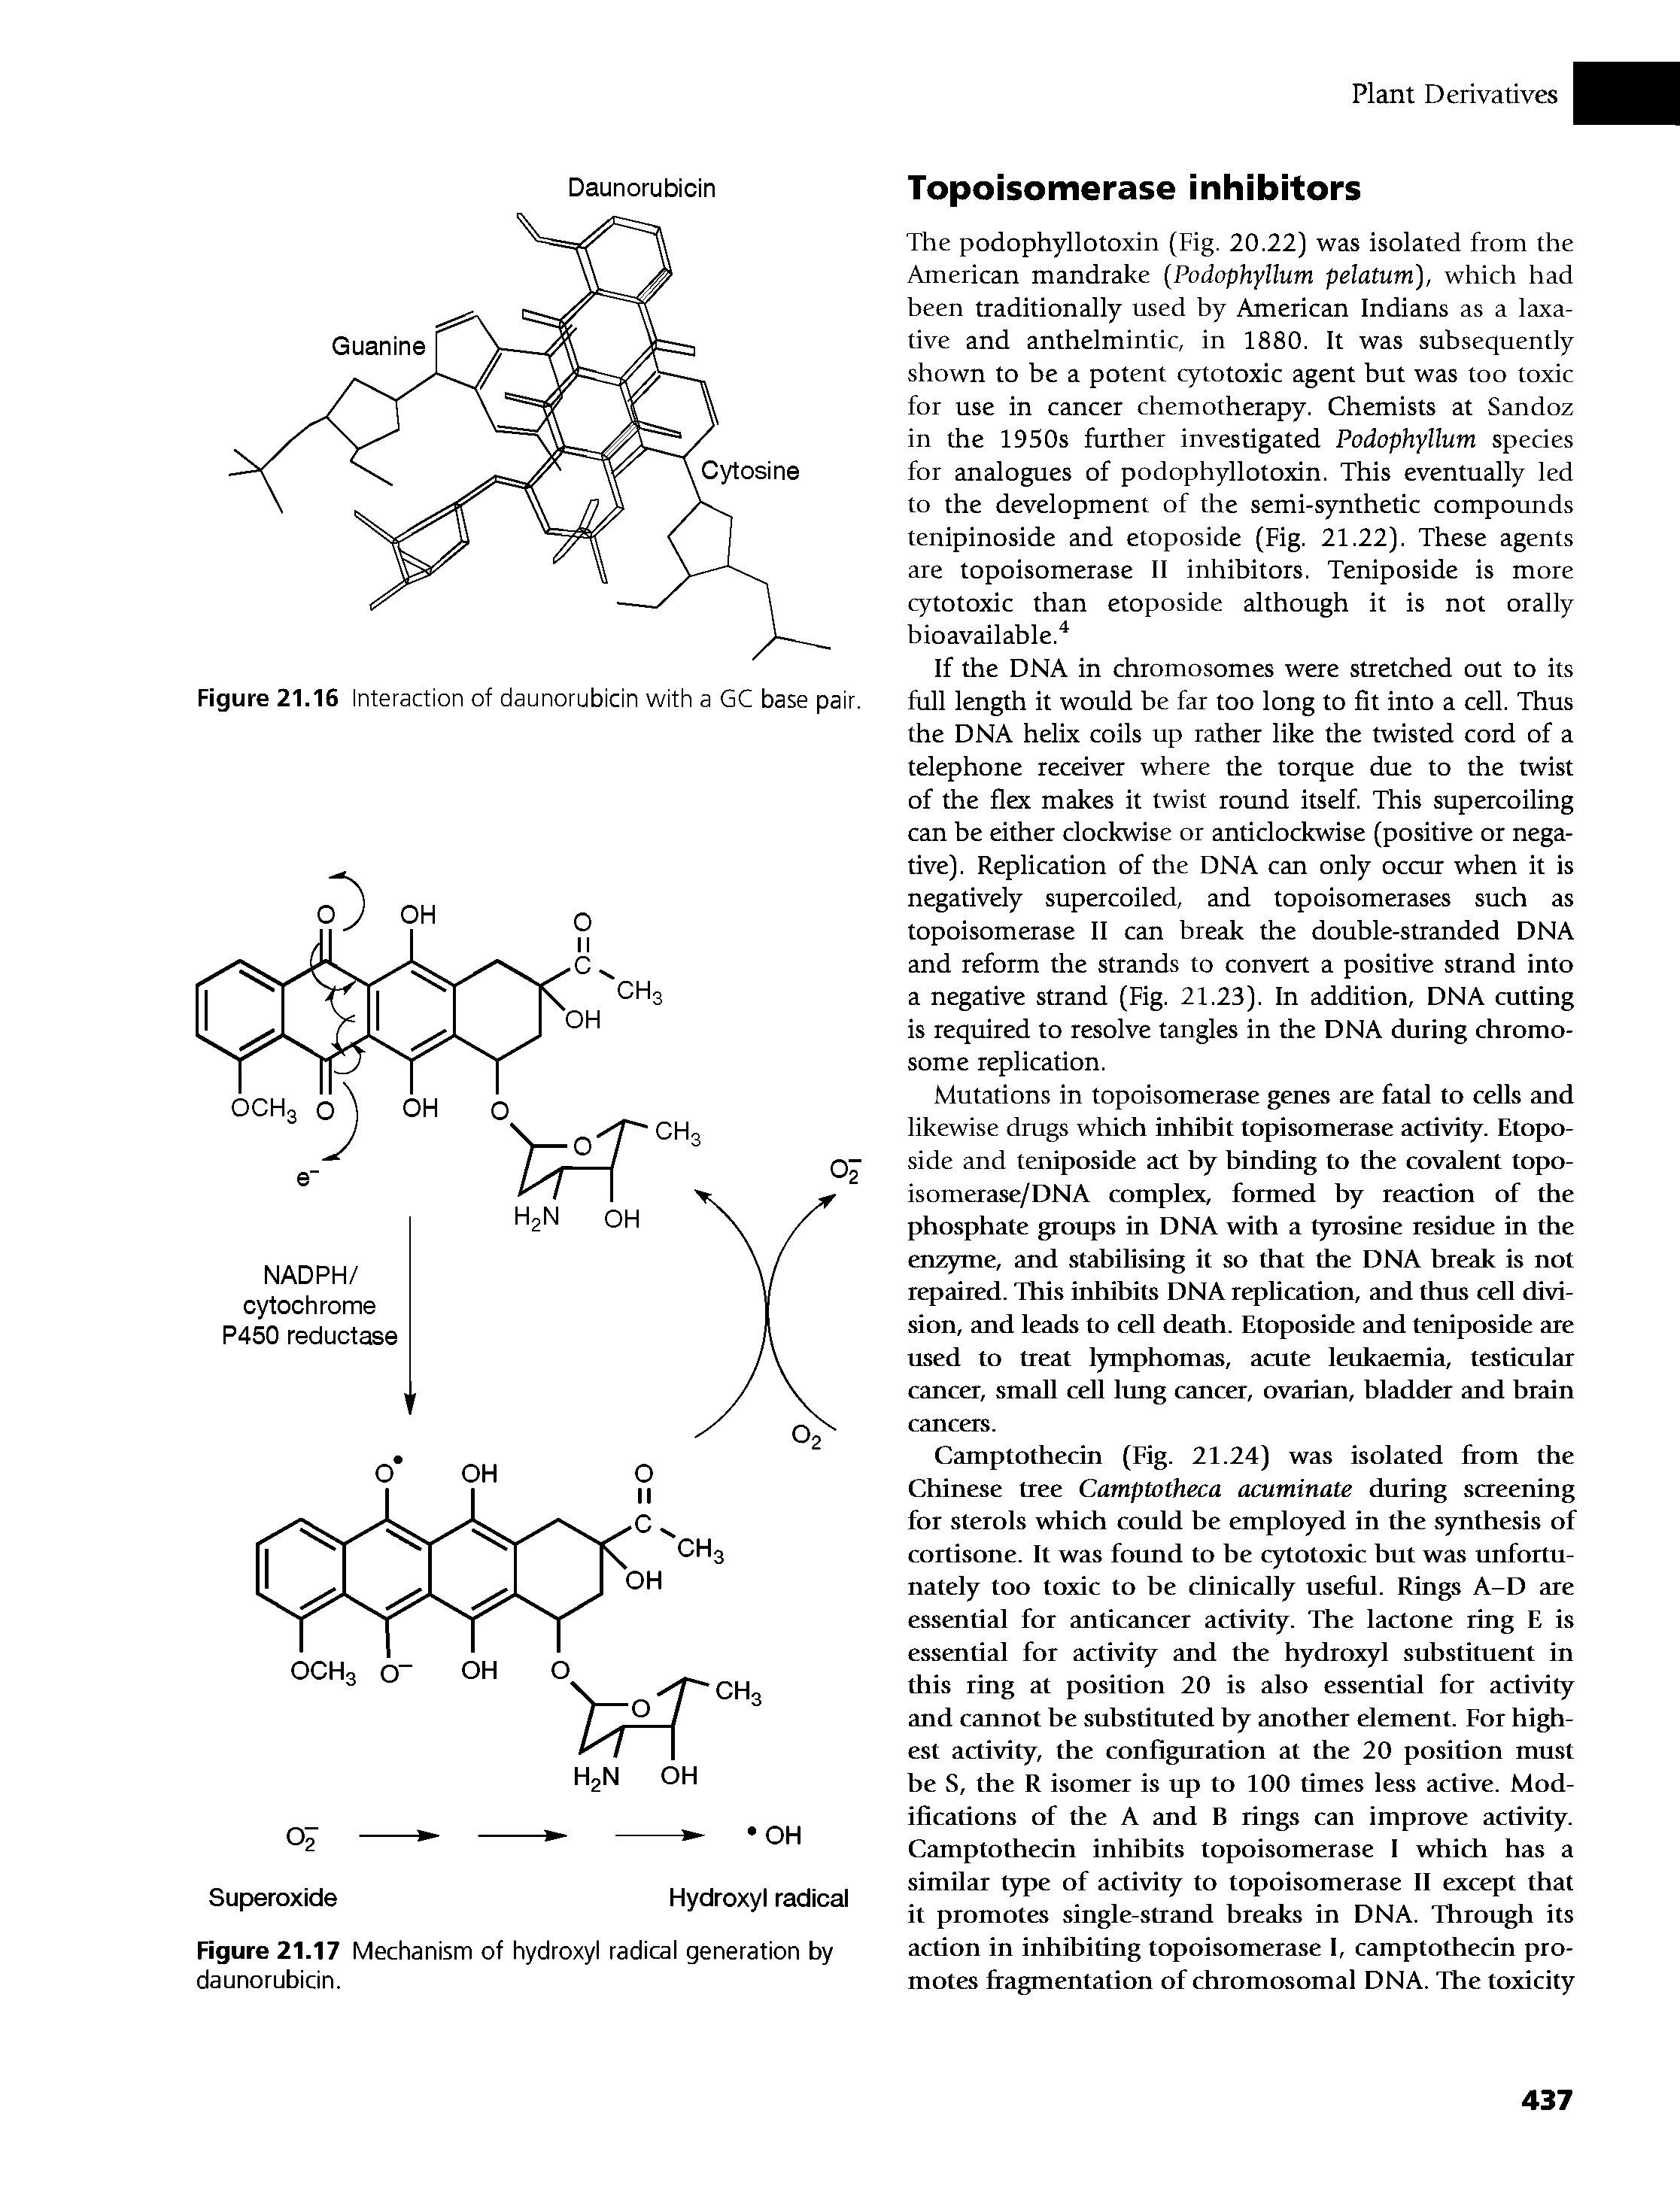 Figure 21.17 Mechanism of hydroxyl radical generation by daunorubicin.